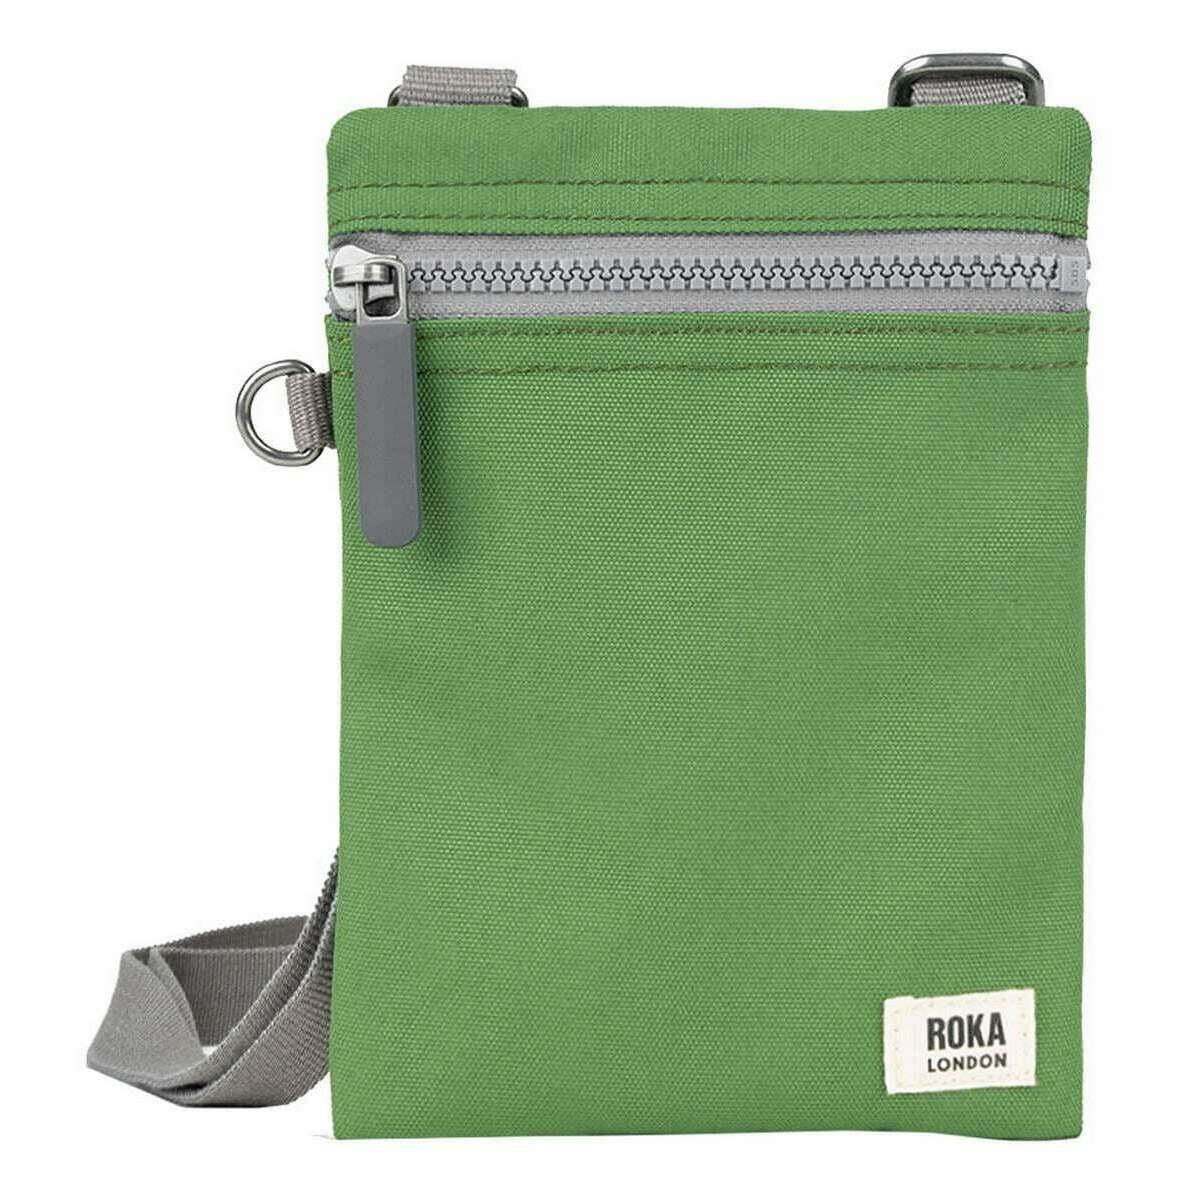 Roka Chelsea Sustainable Canvas Pocket Sling Bag - Foliage Green